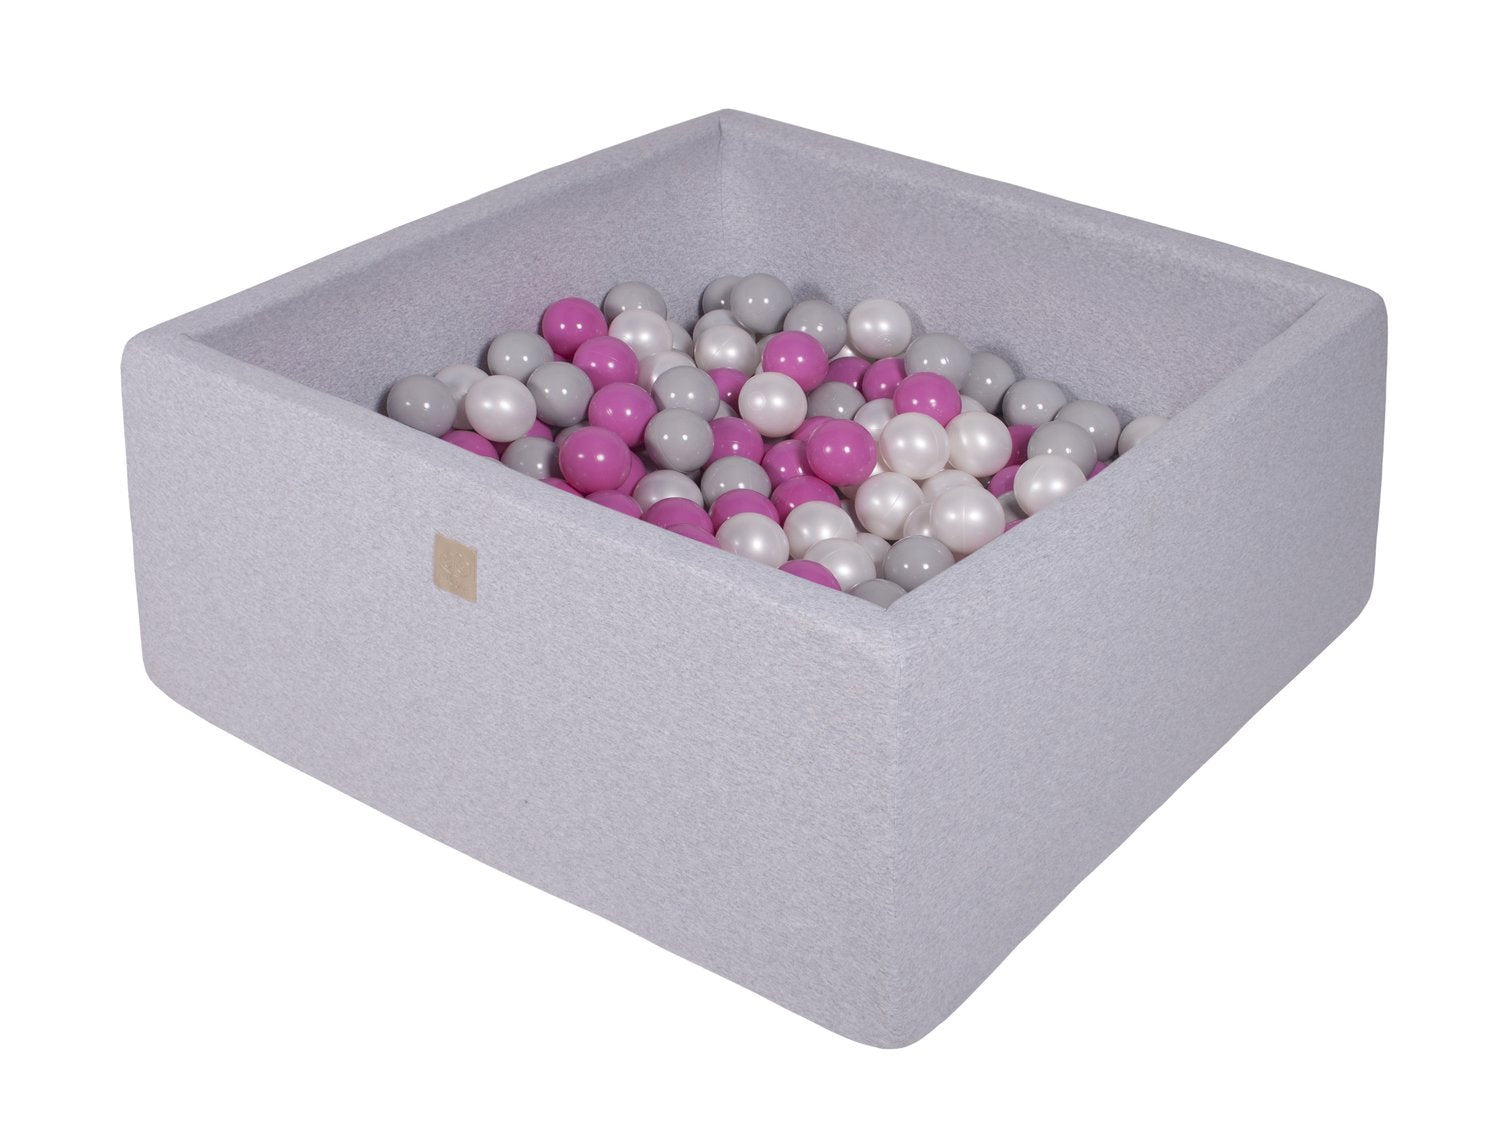 Vierkante ballenbak - Licht grijs met Parelwitte, Licht roze en Grijze ballen